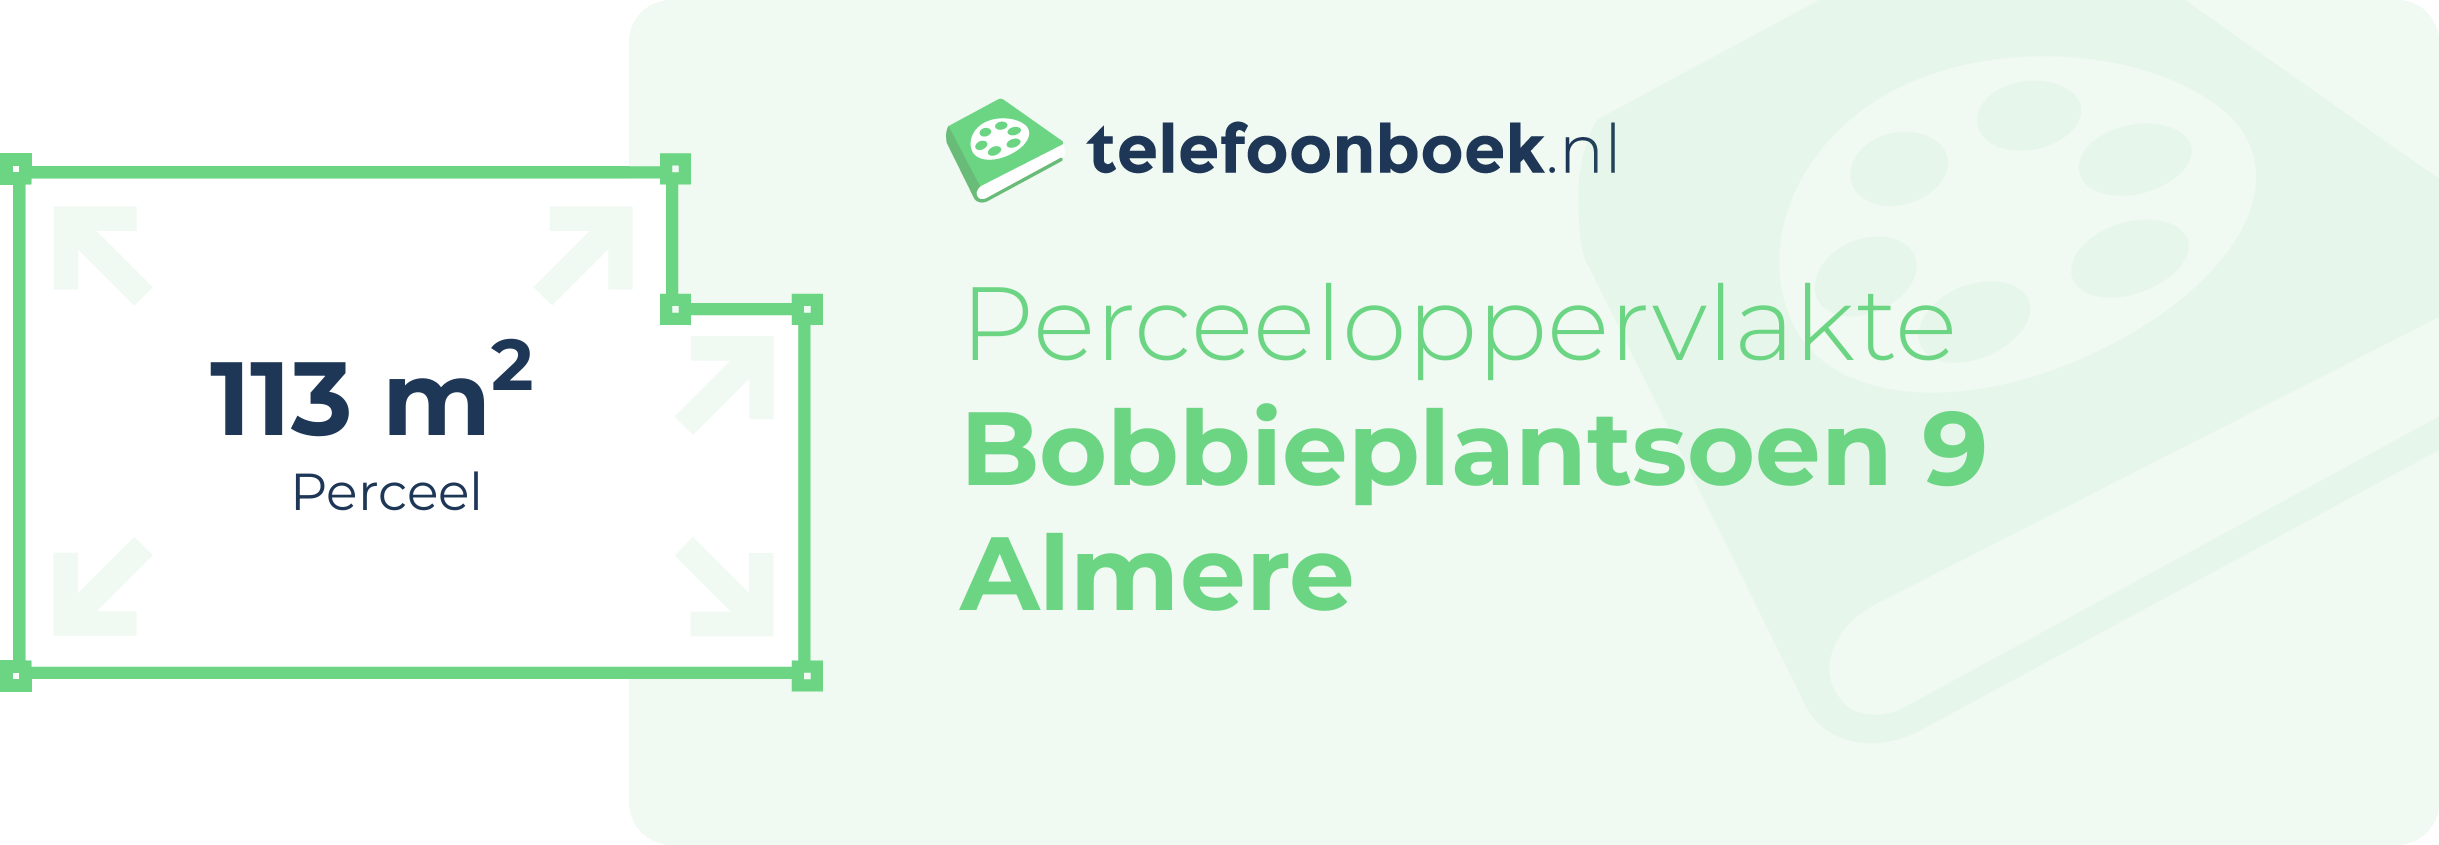 Perceeloppervlakte Bobbieplantsoen 9 Almere